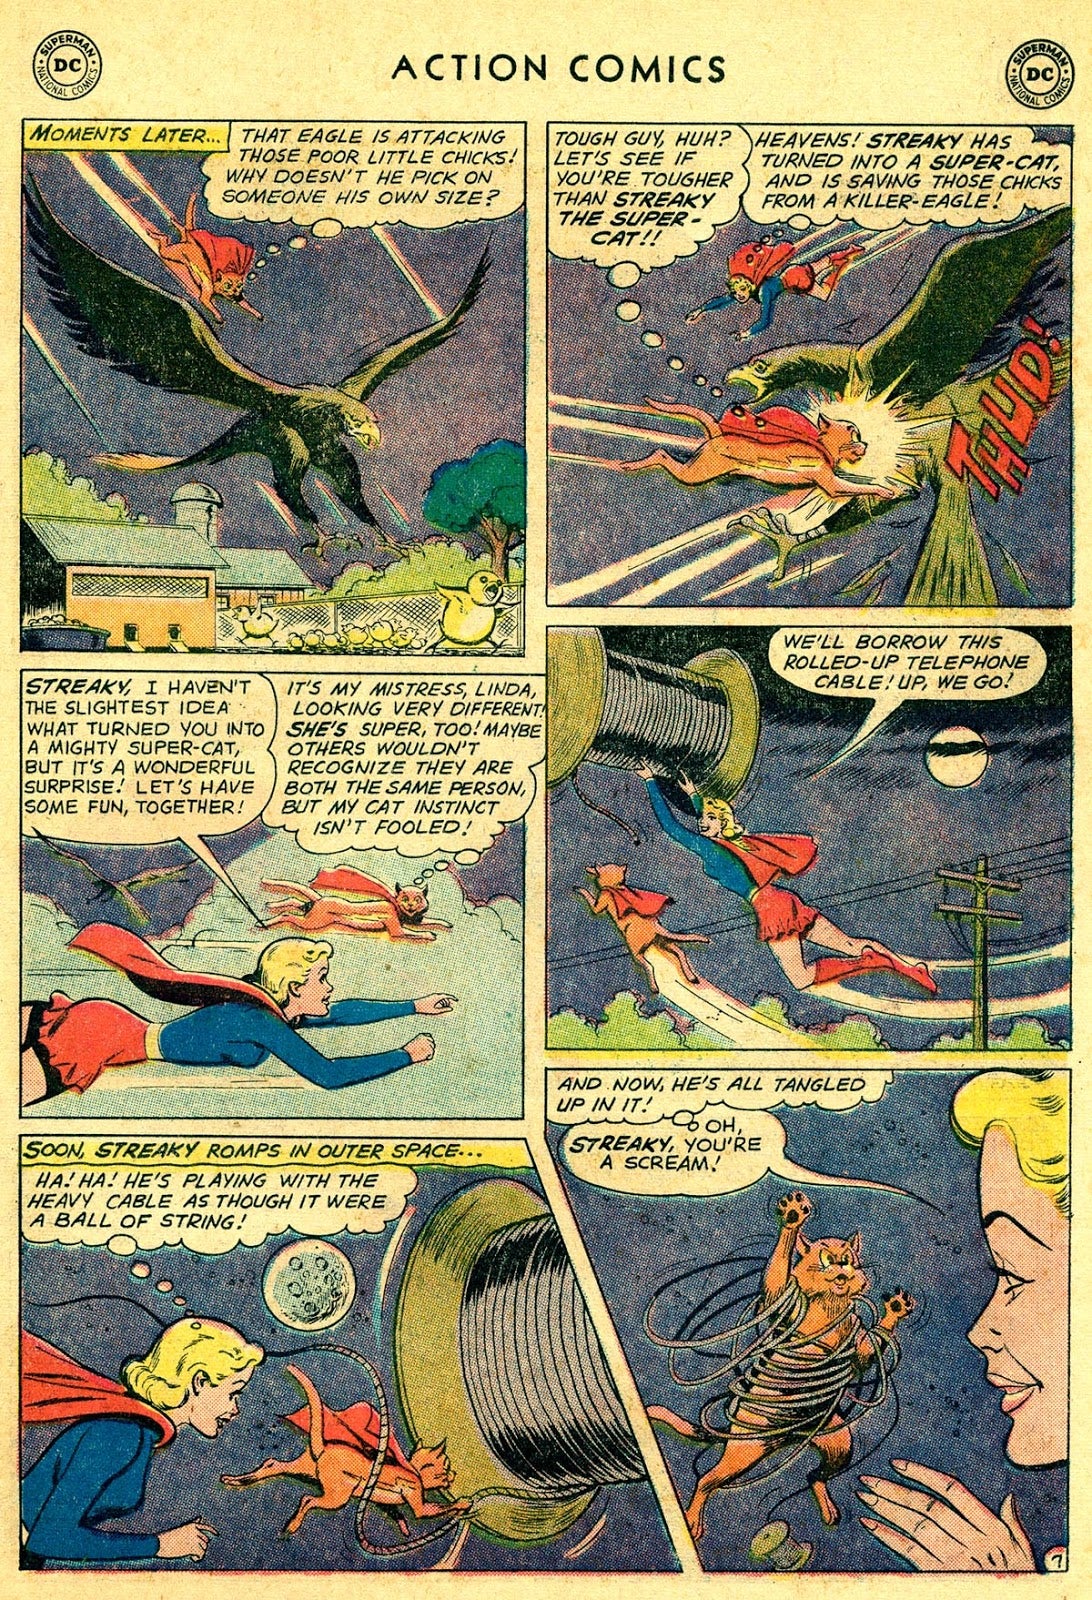 Action Comics #261 (Image: DC Comics)